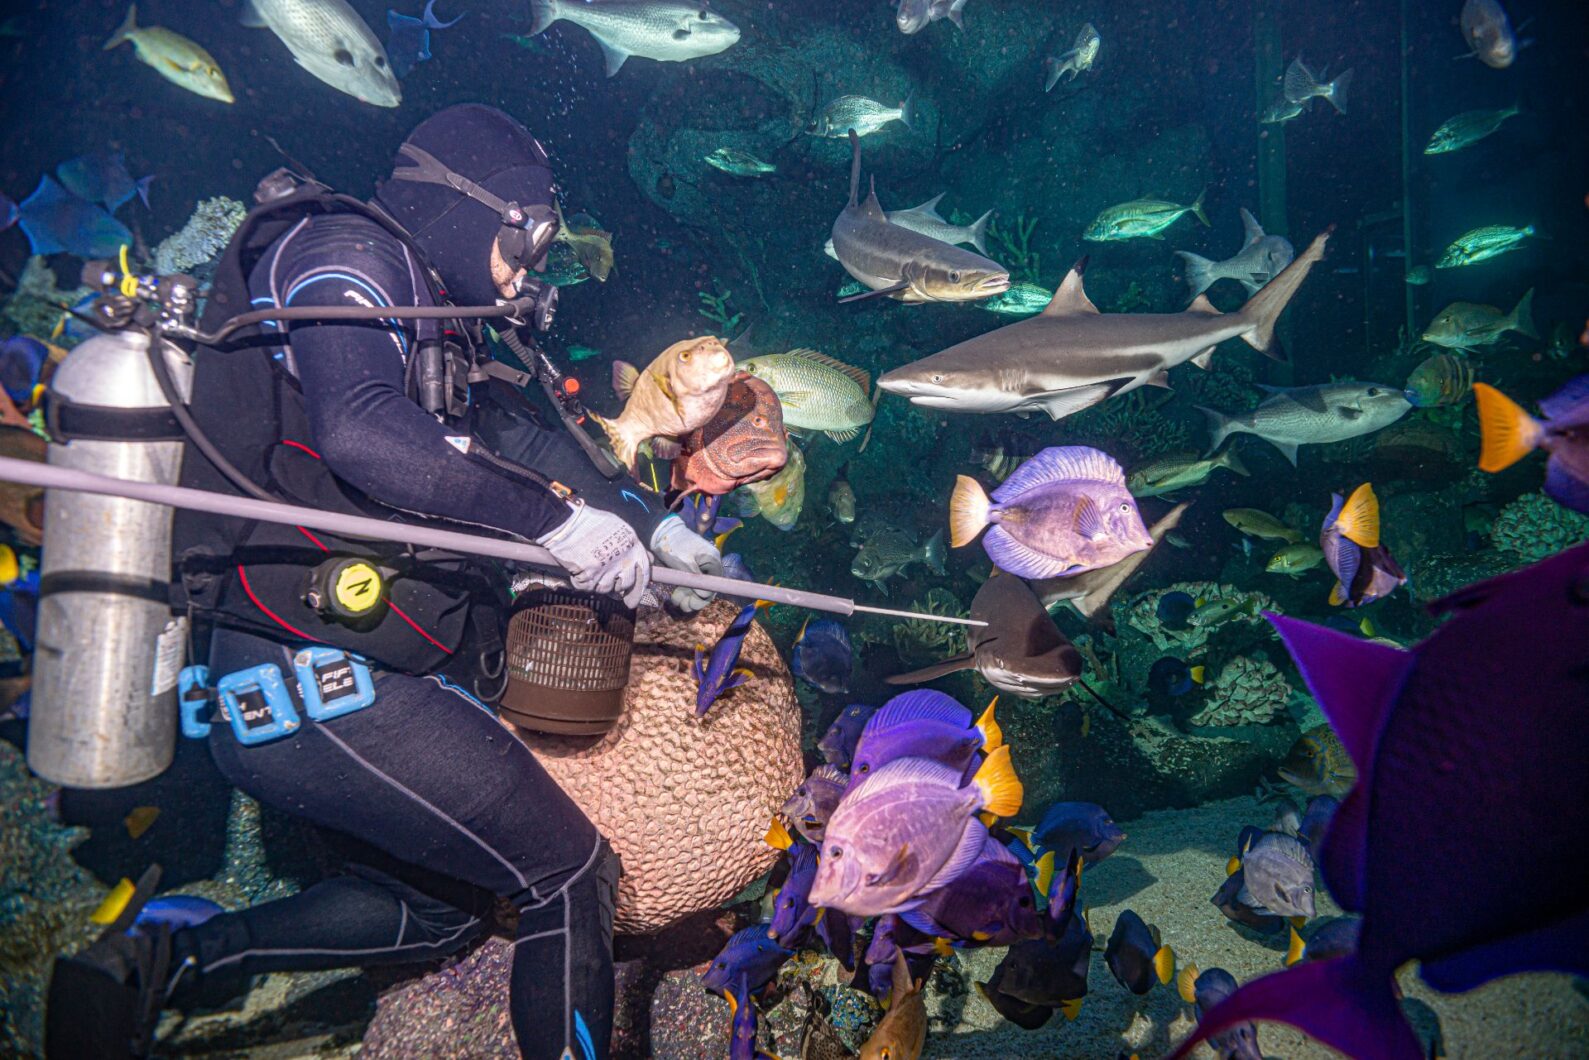 fiding-fish-oman-public-aquarium-orphek-led